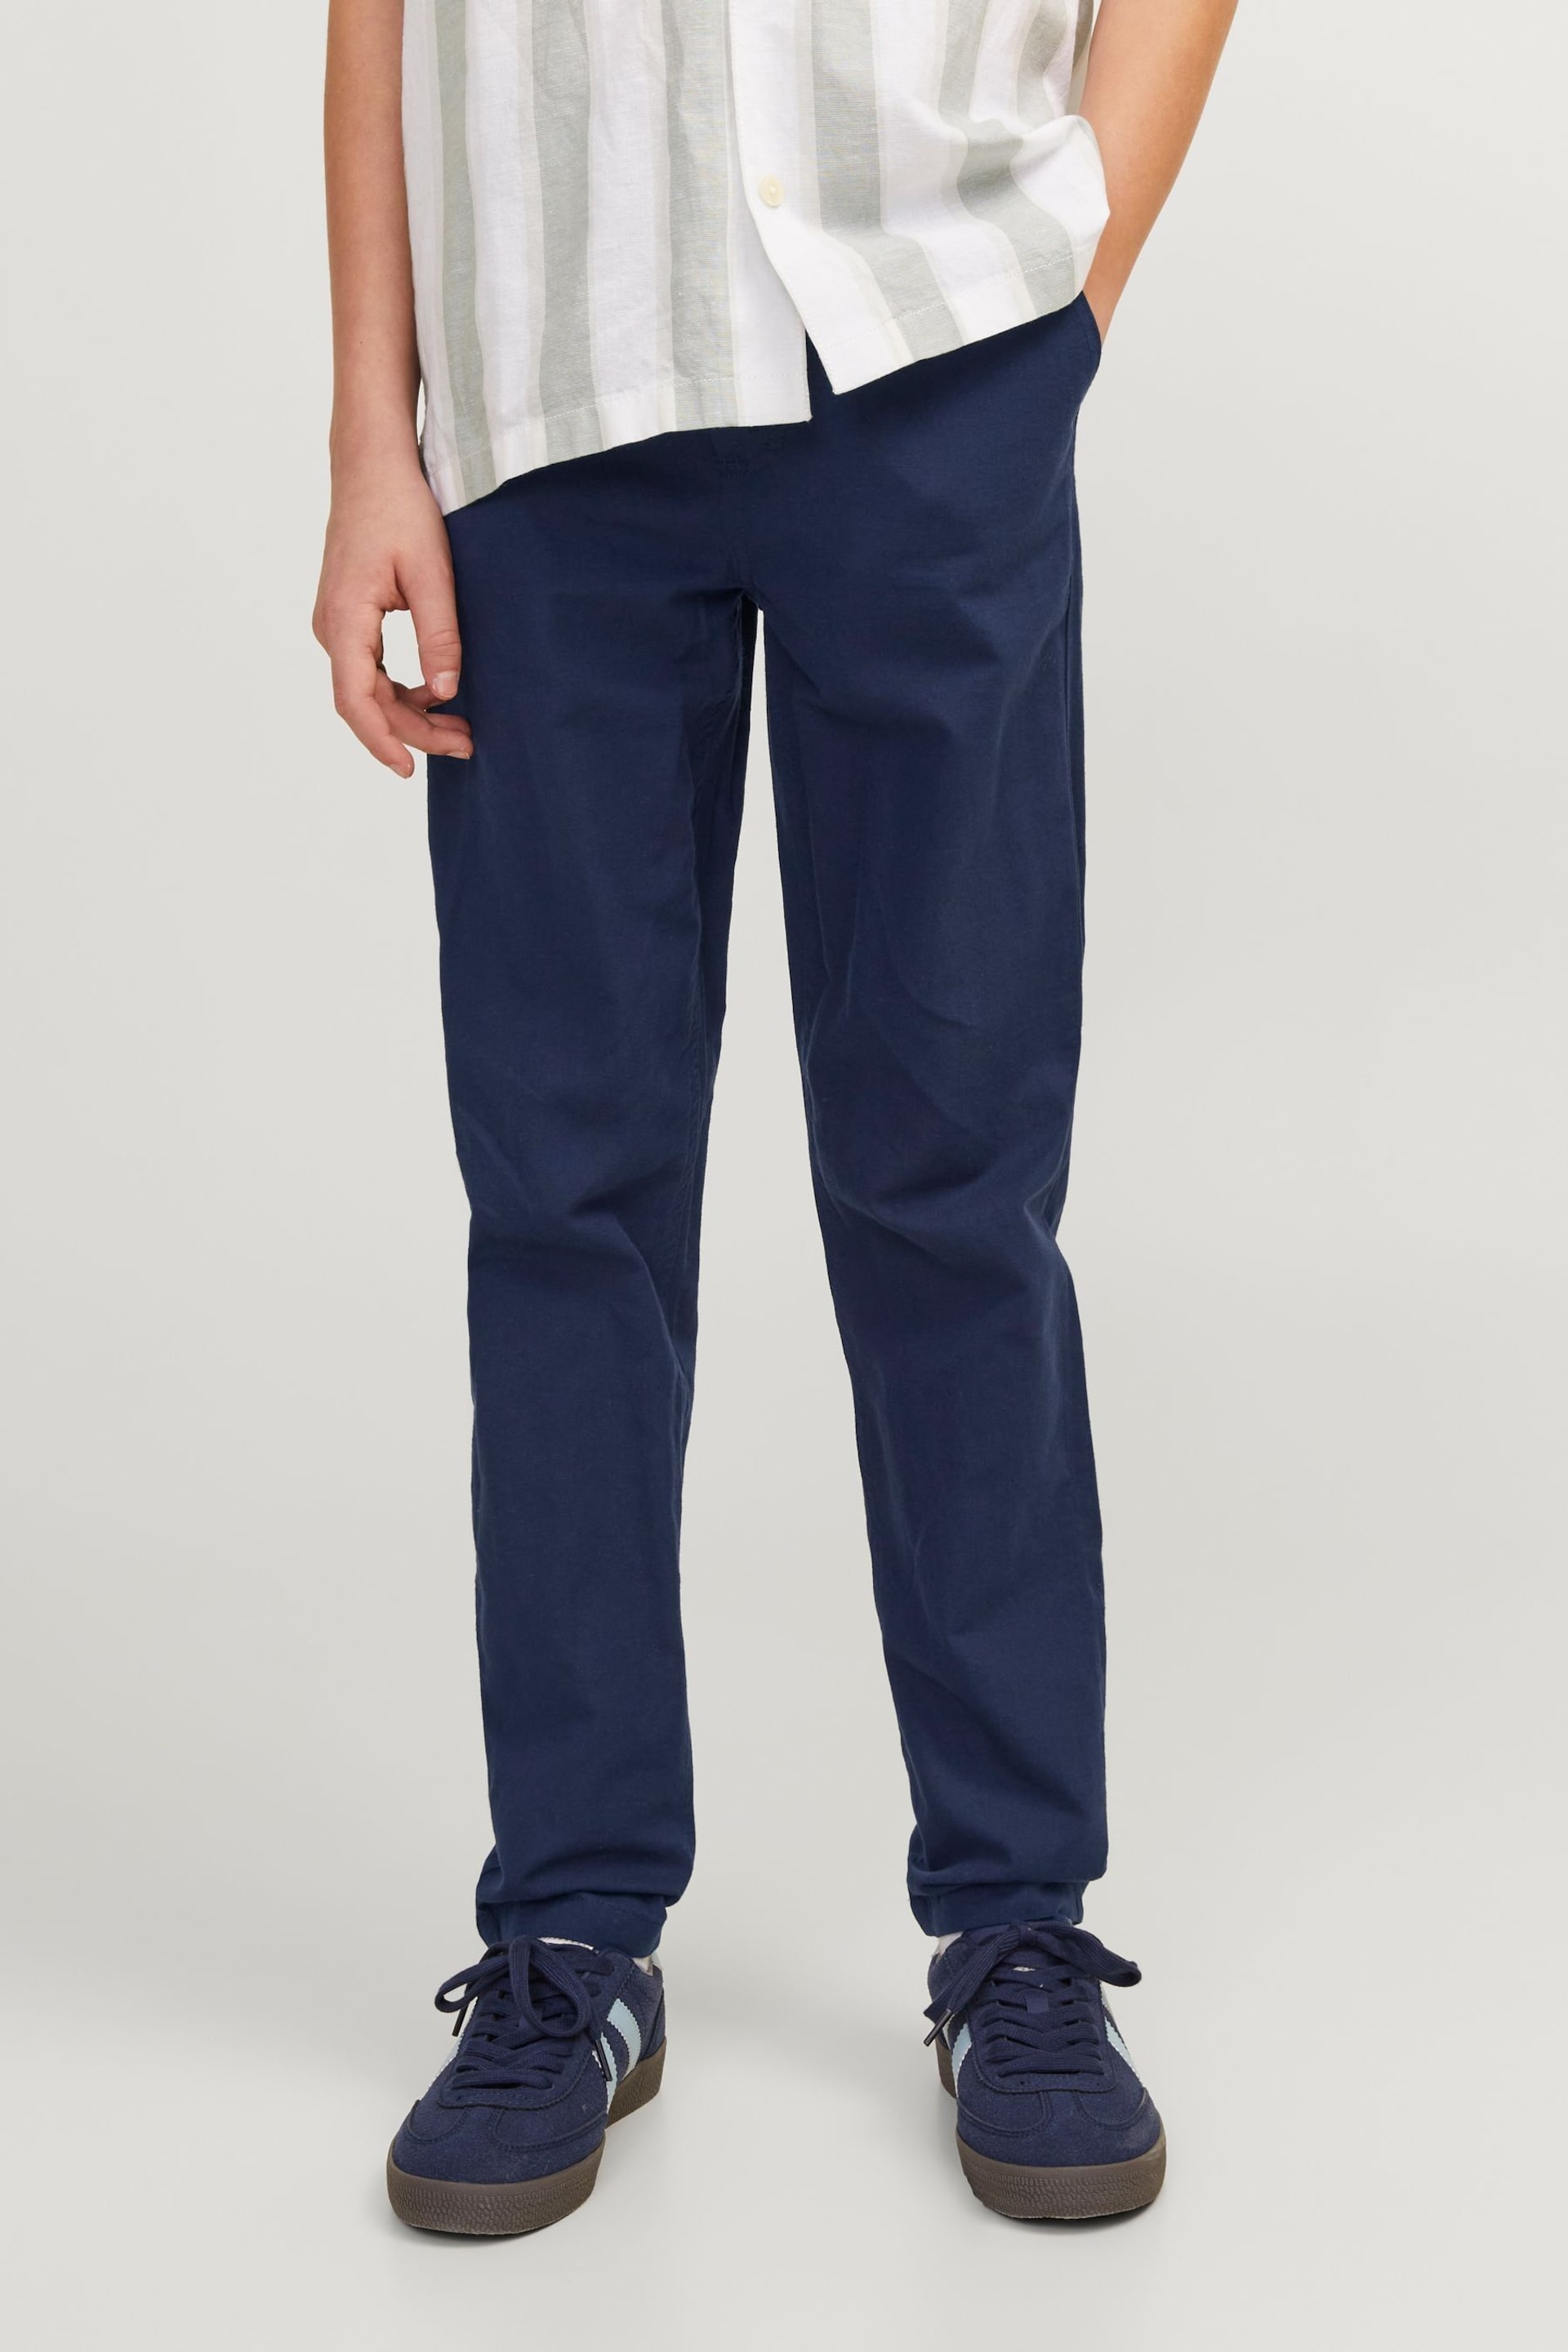 JACK & JONES JUNIOR Blue Linen Blend Drawstring Waist Trousers - Image 1 of 8